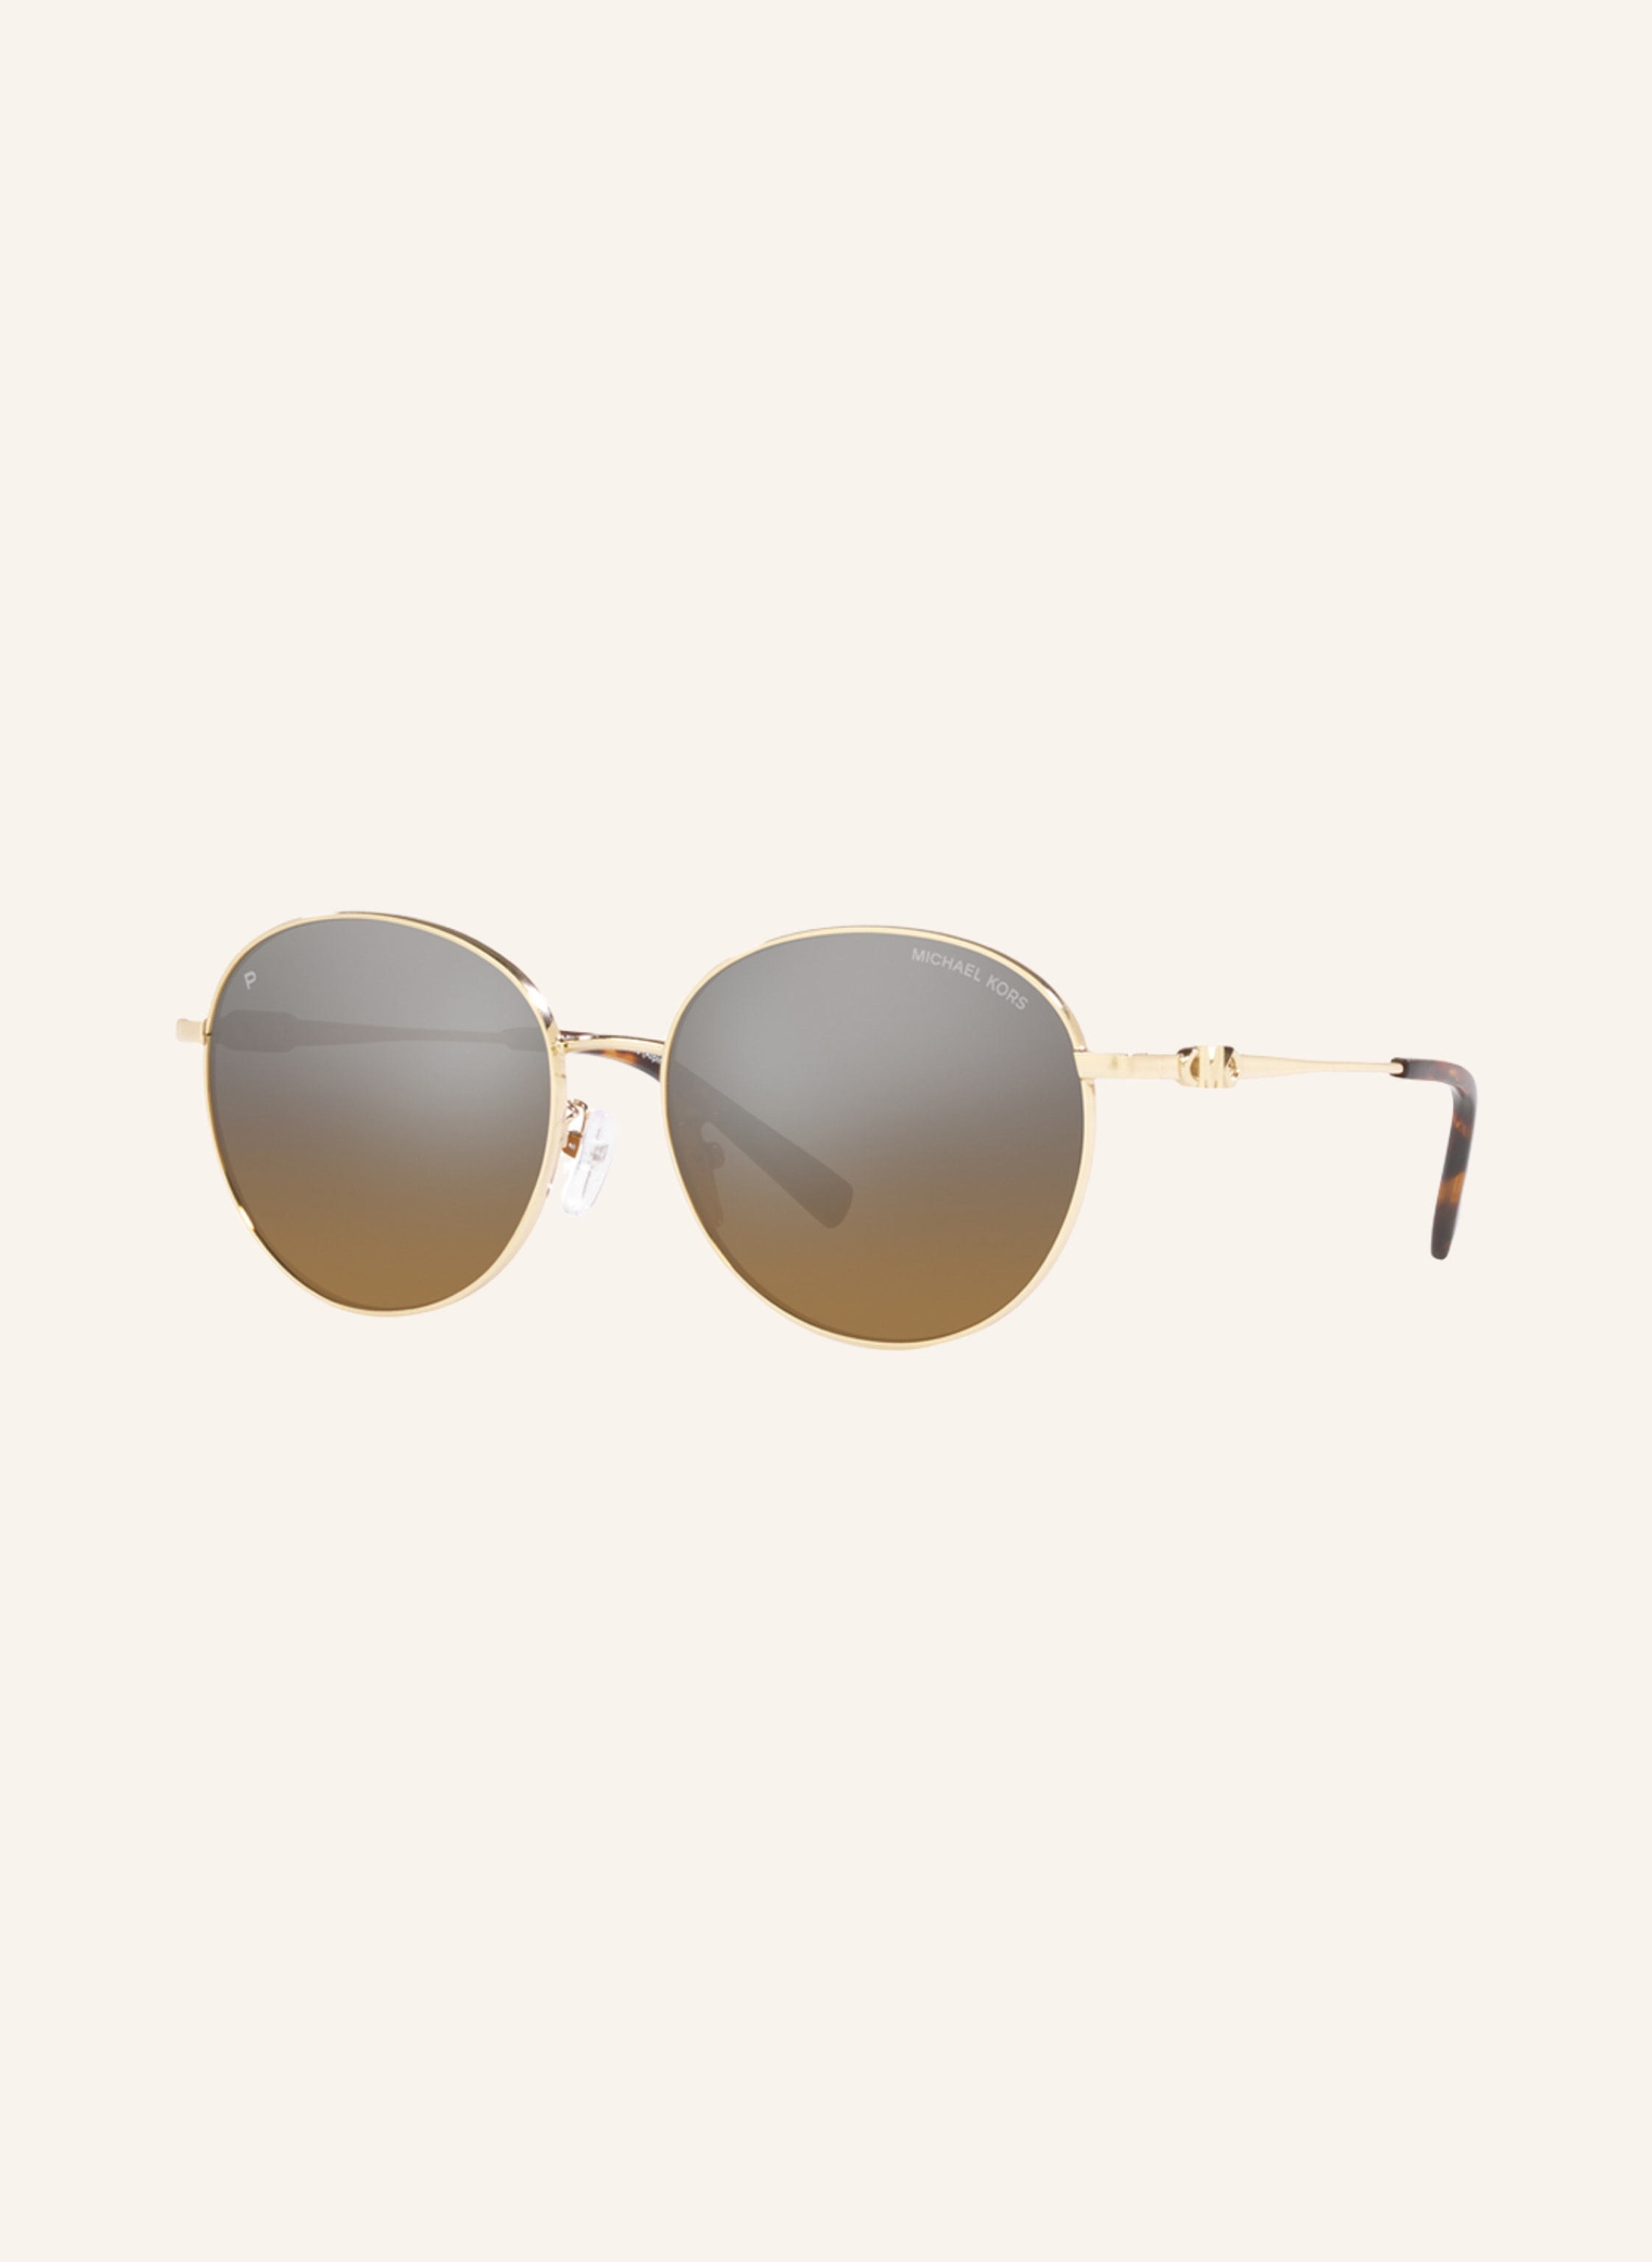 Michael Kors Polarized Sunglasses  MK1010 54 Adrianna I  Macys